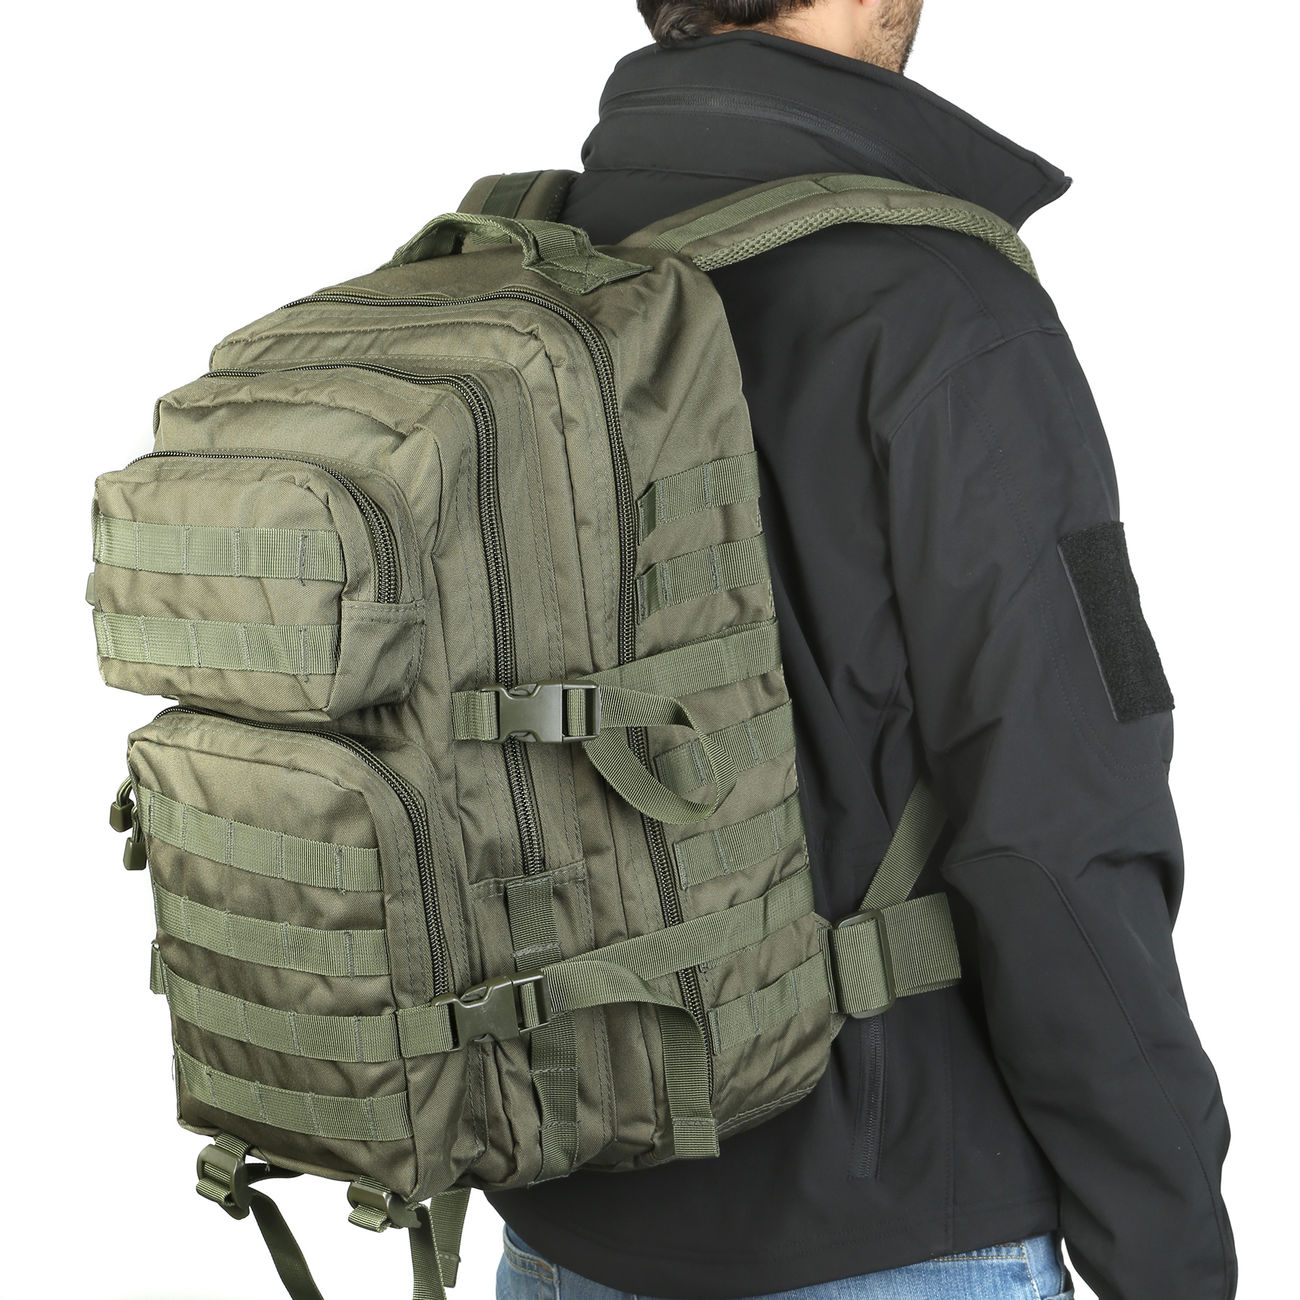 Mil-Tec NEU Mil-Tec Rucksack US Assault Pack II vegetato für Camping Outdoor Survival 